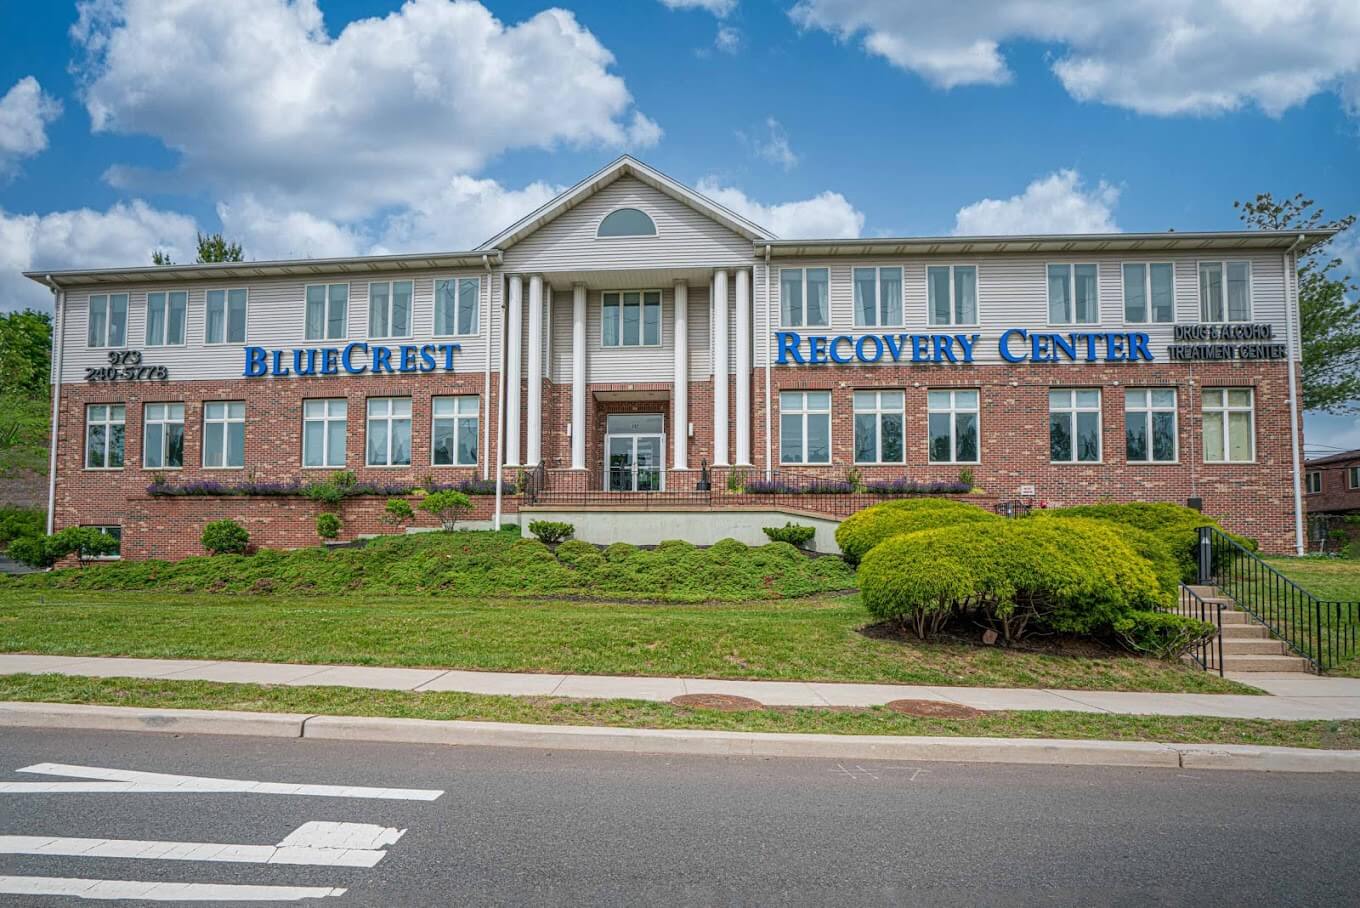 Bluecrest Recovery Center